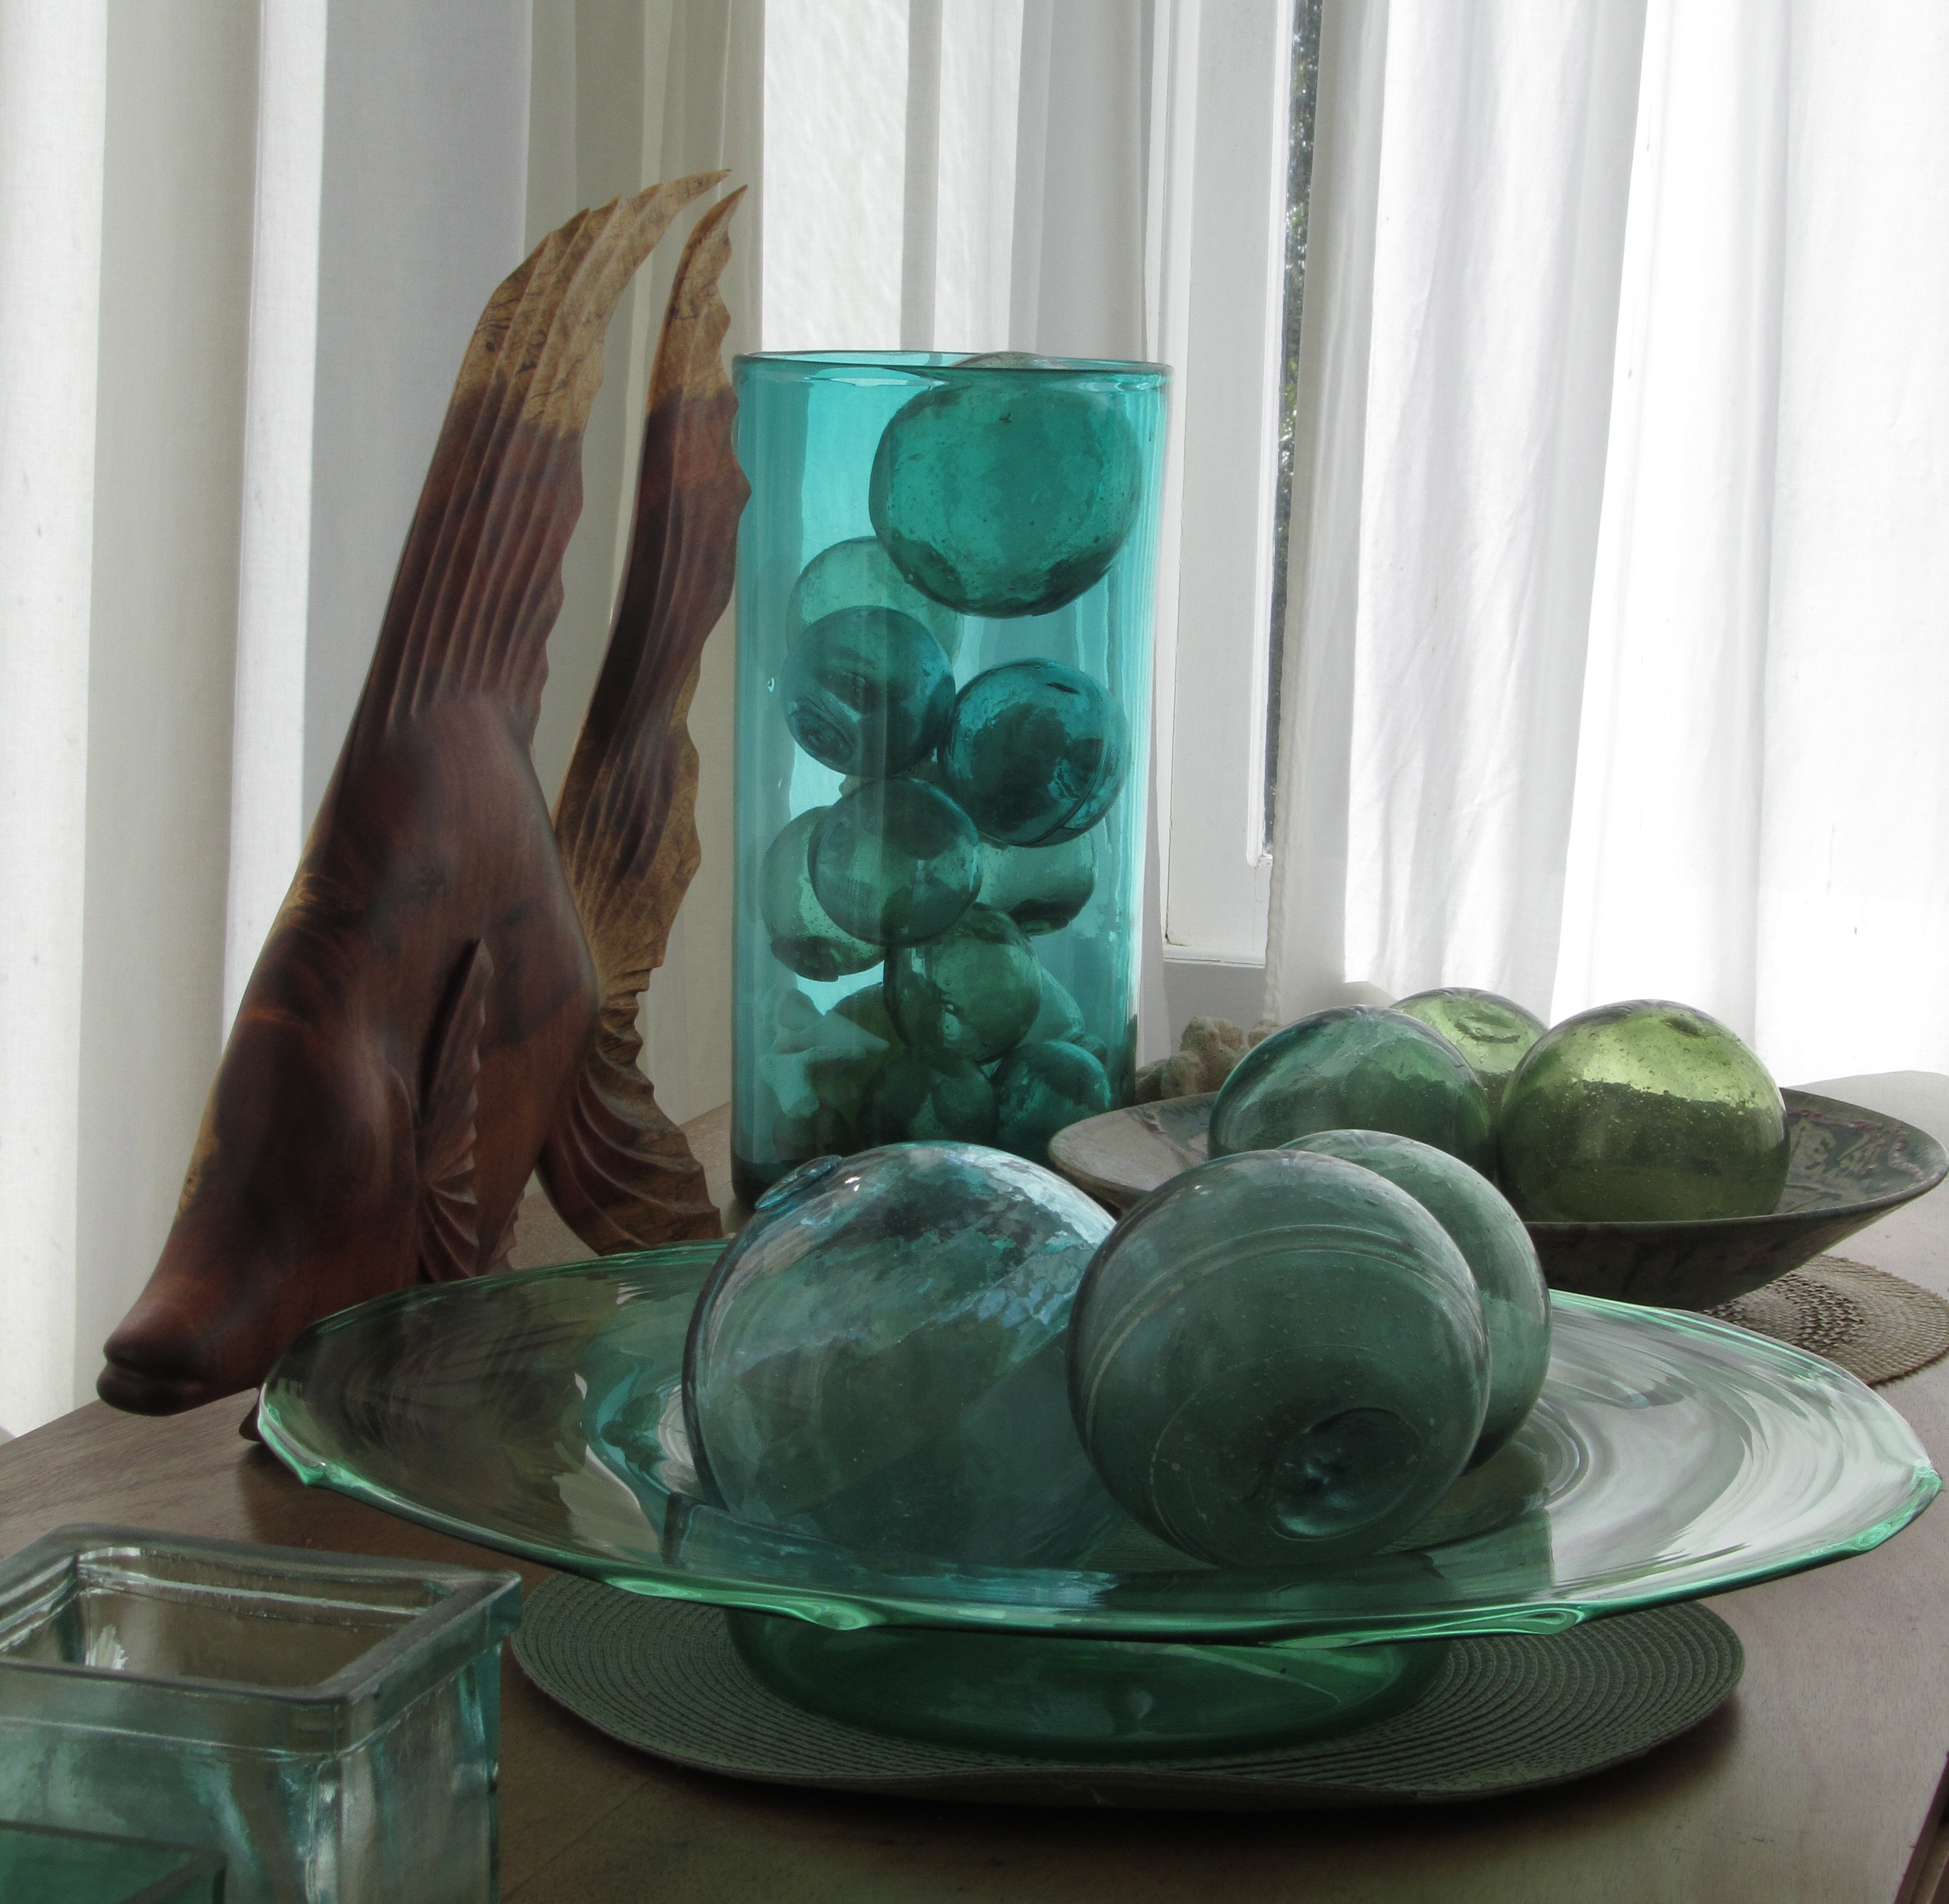 Sheer Simplicity…More Japanese Glass Fishing Float Displays